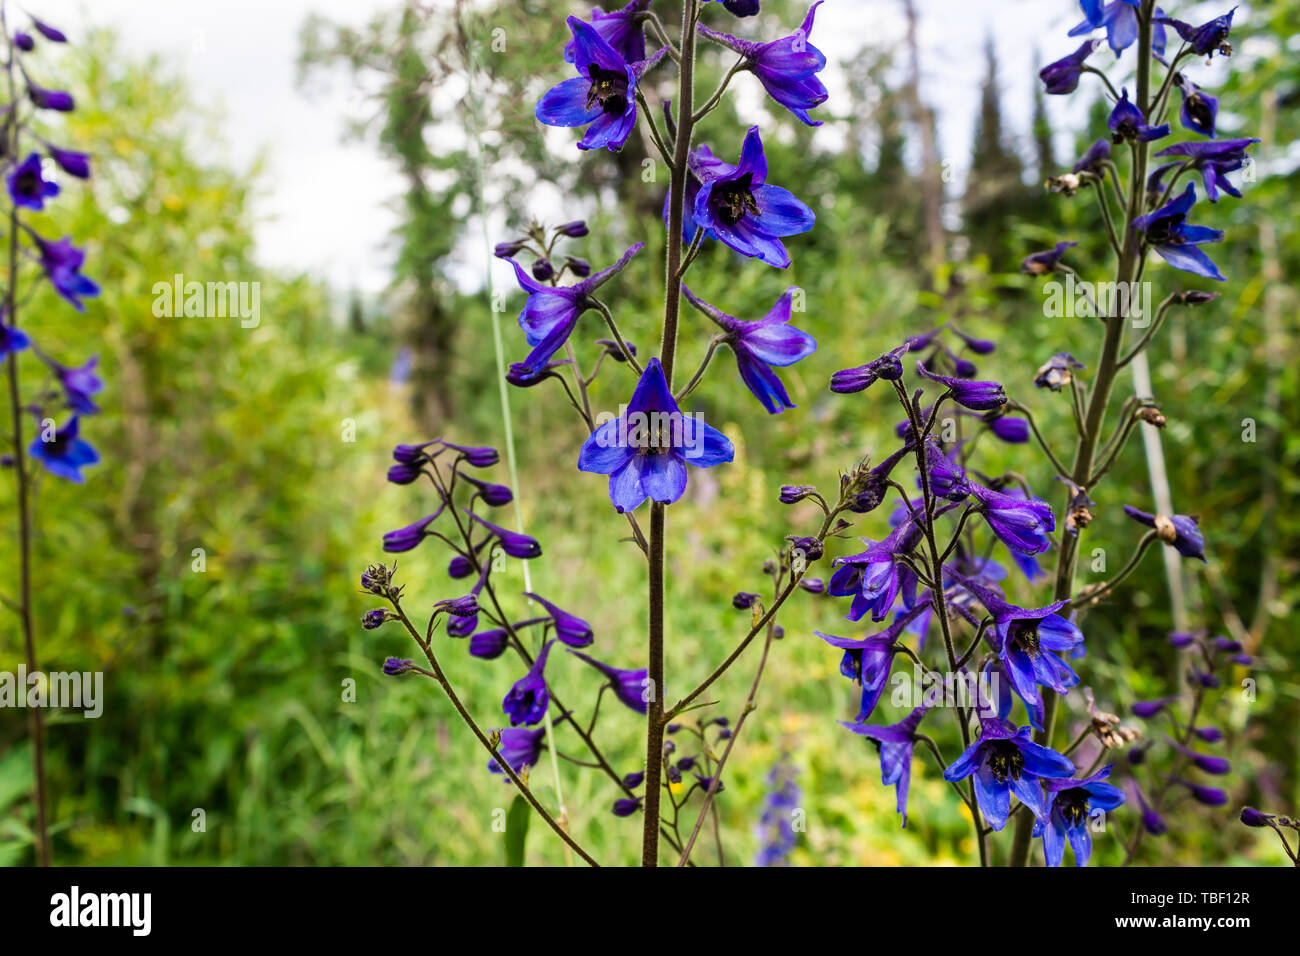 Purple bell flowers in green grass Stock Photo